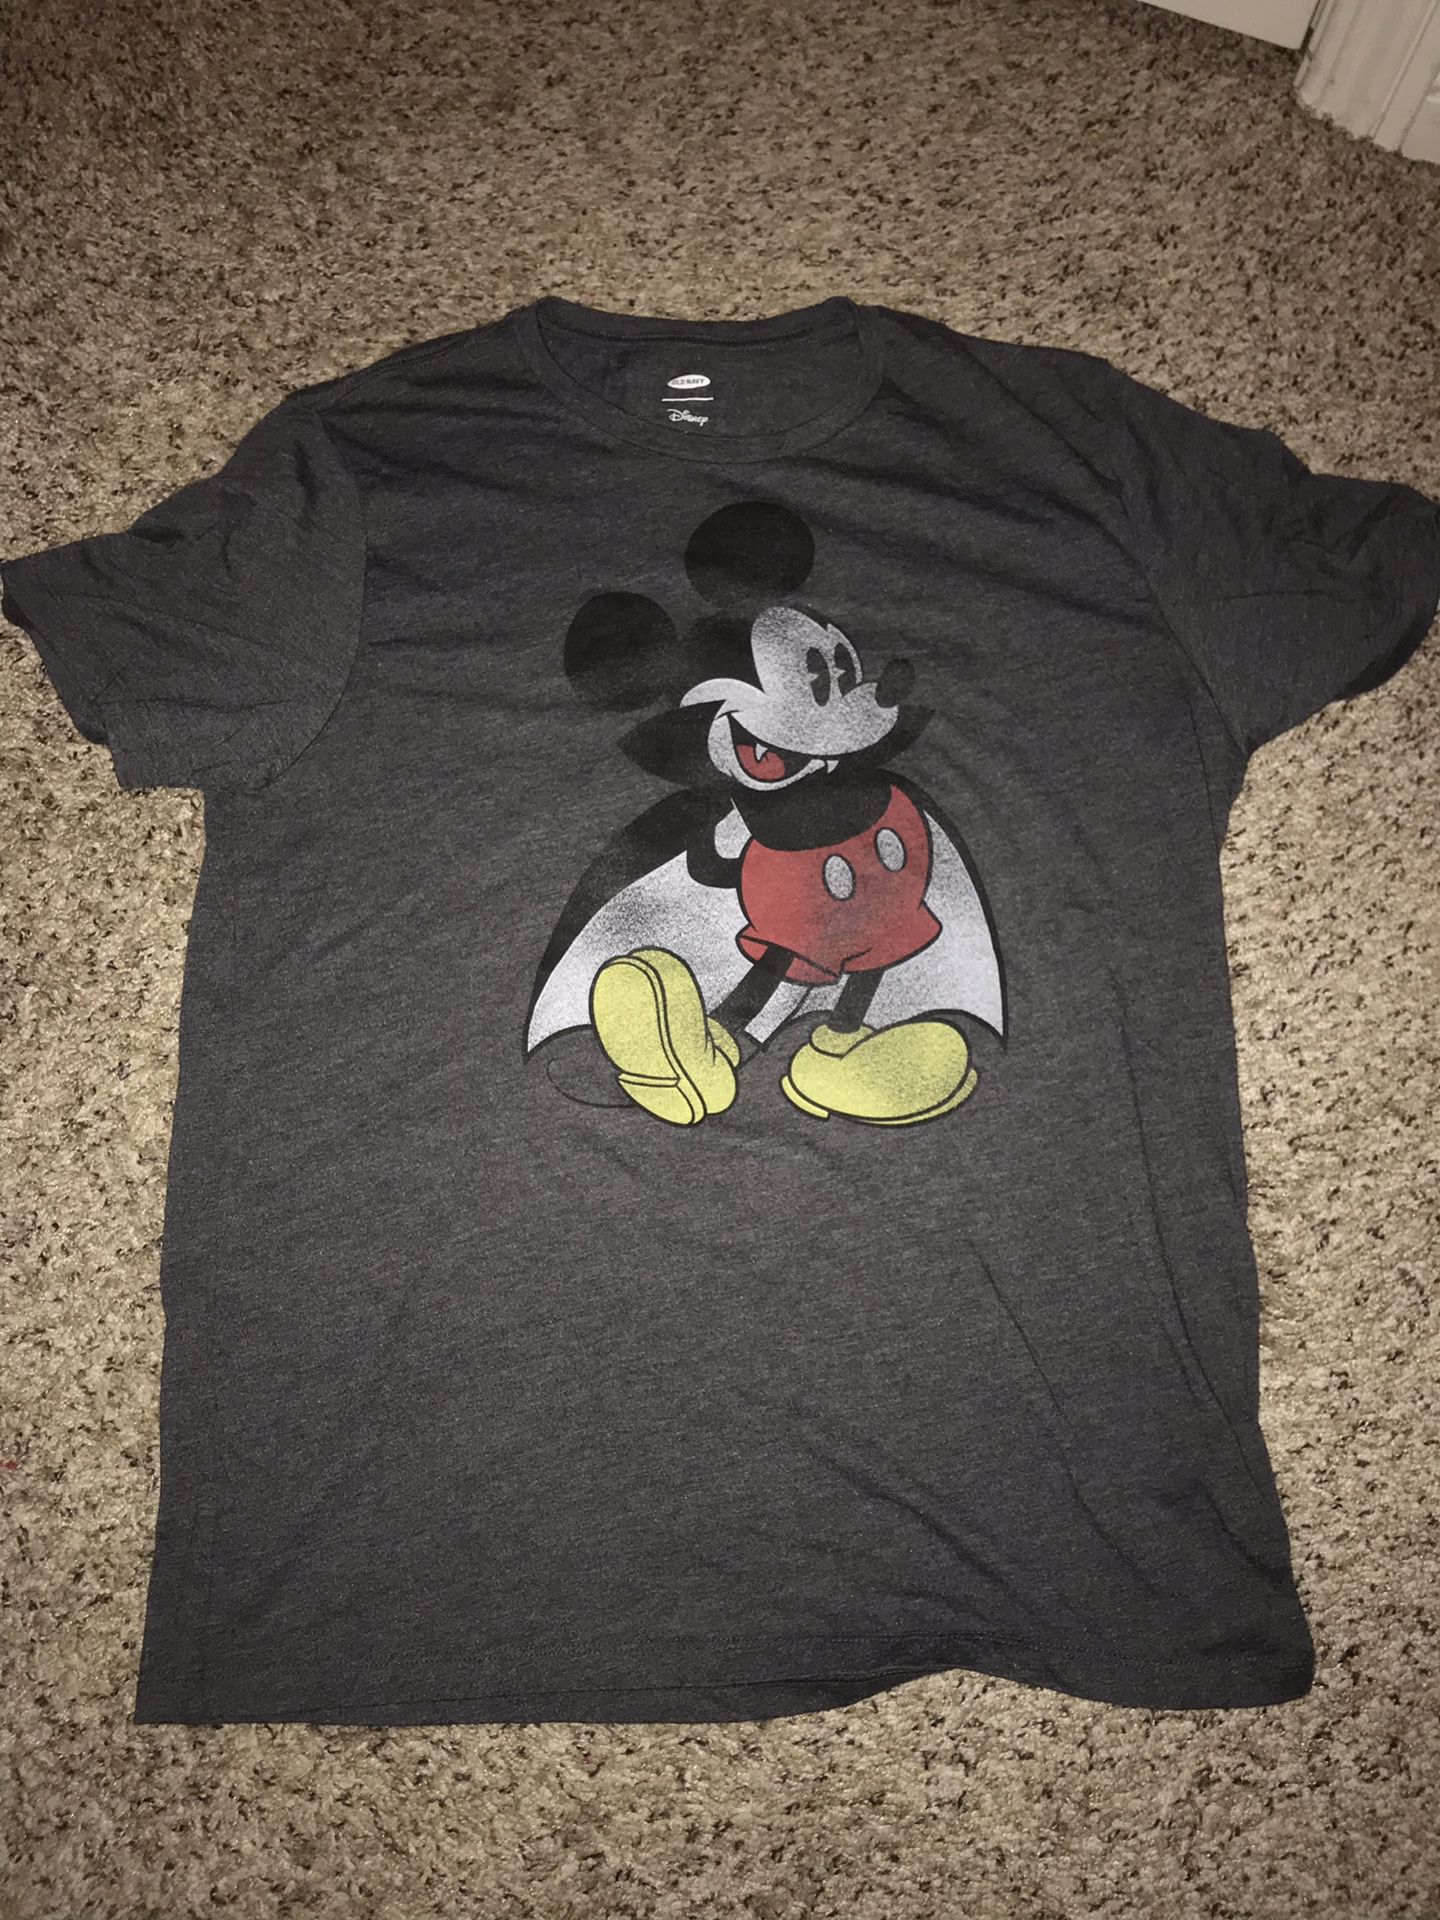 Mickey Mouse Vampire Shirt